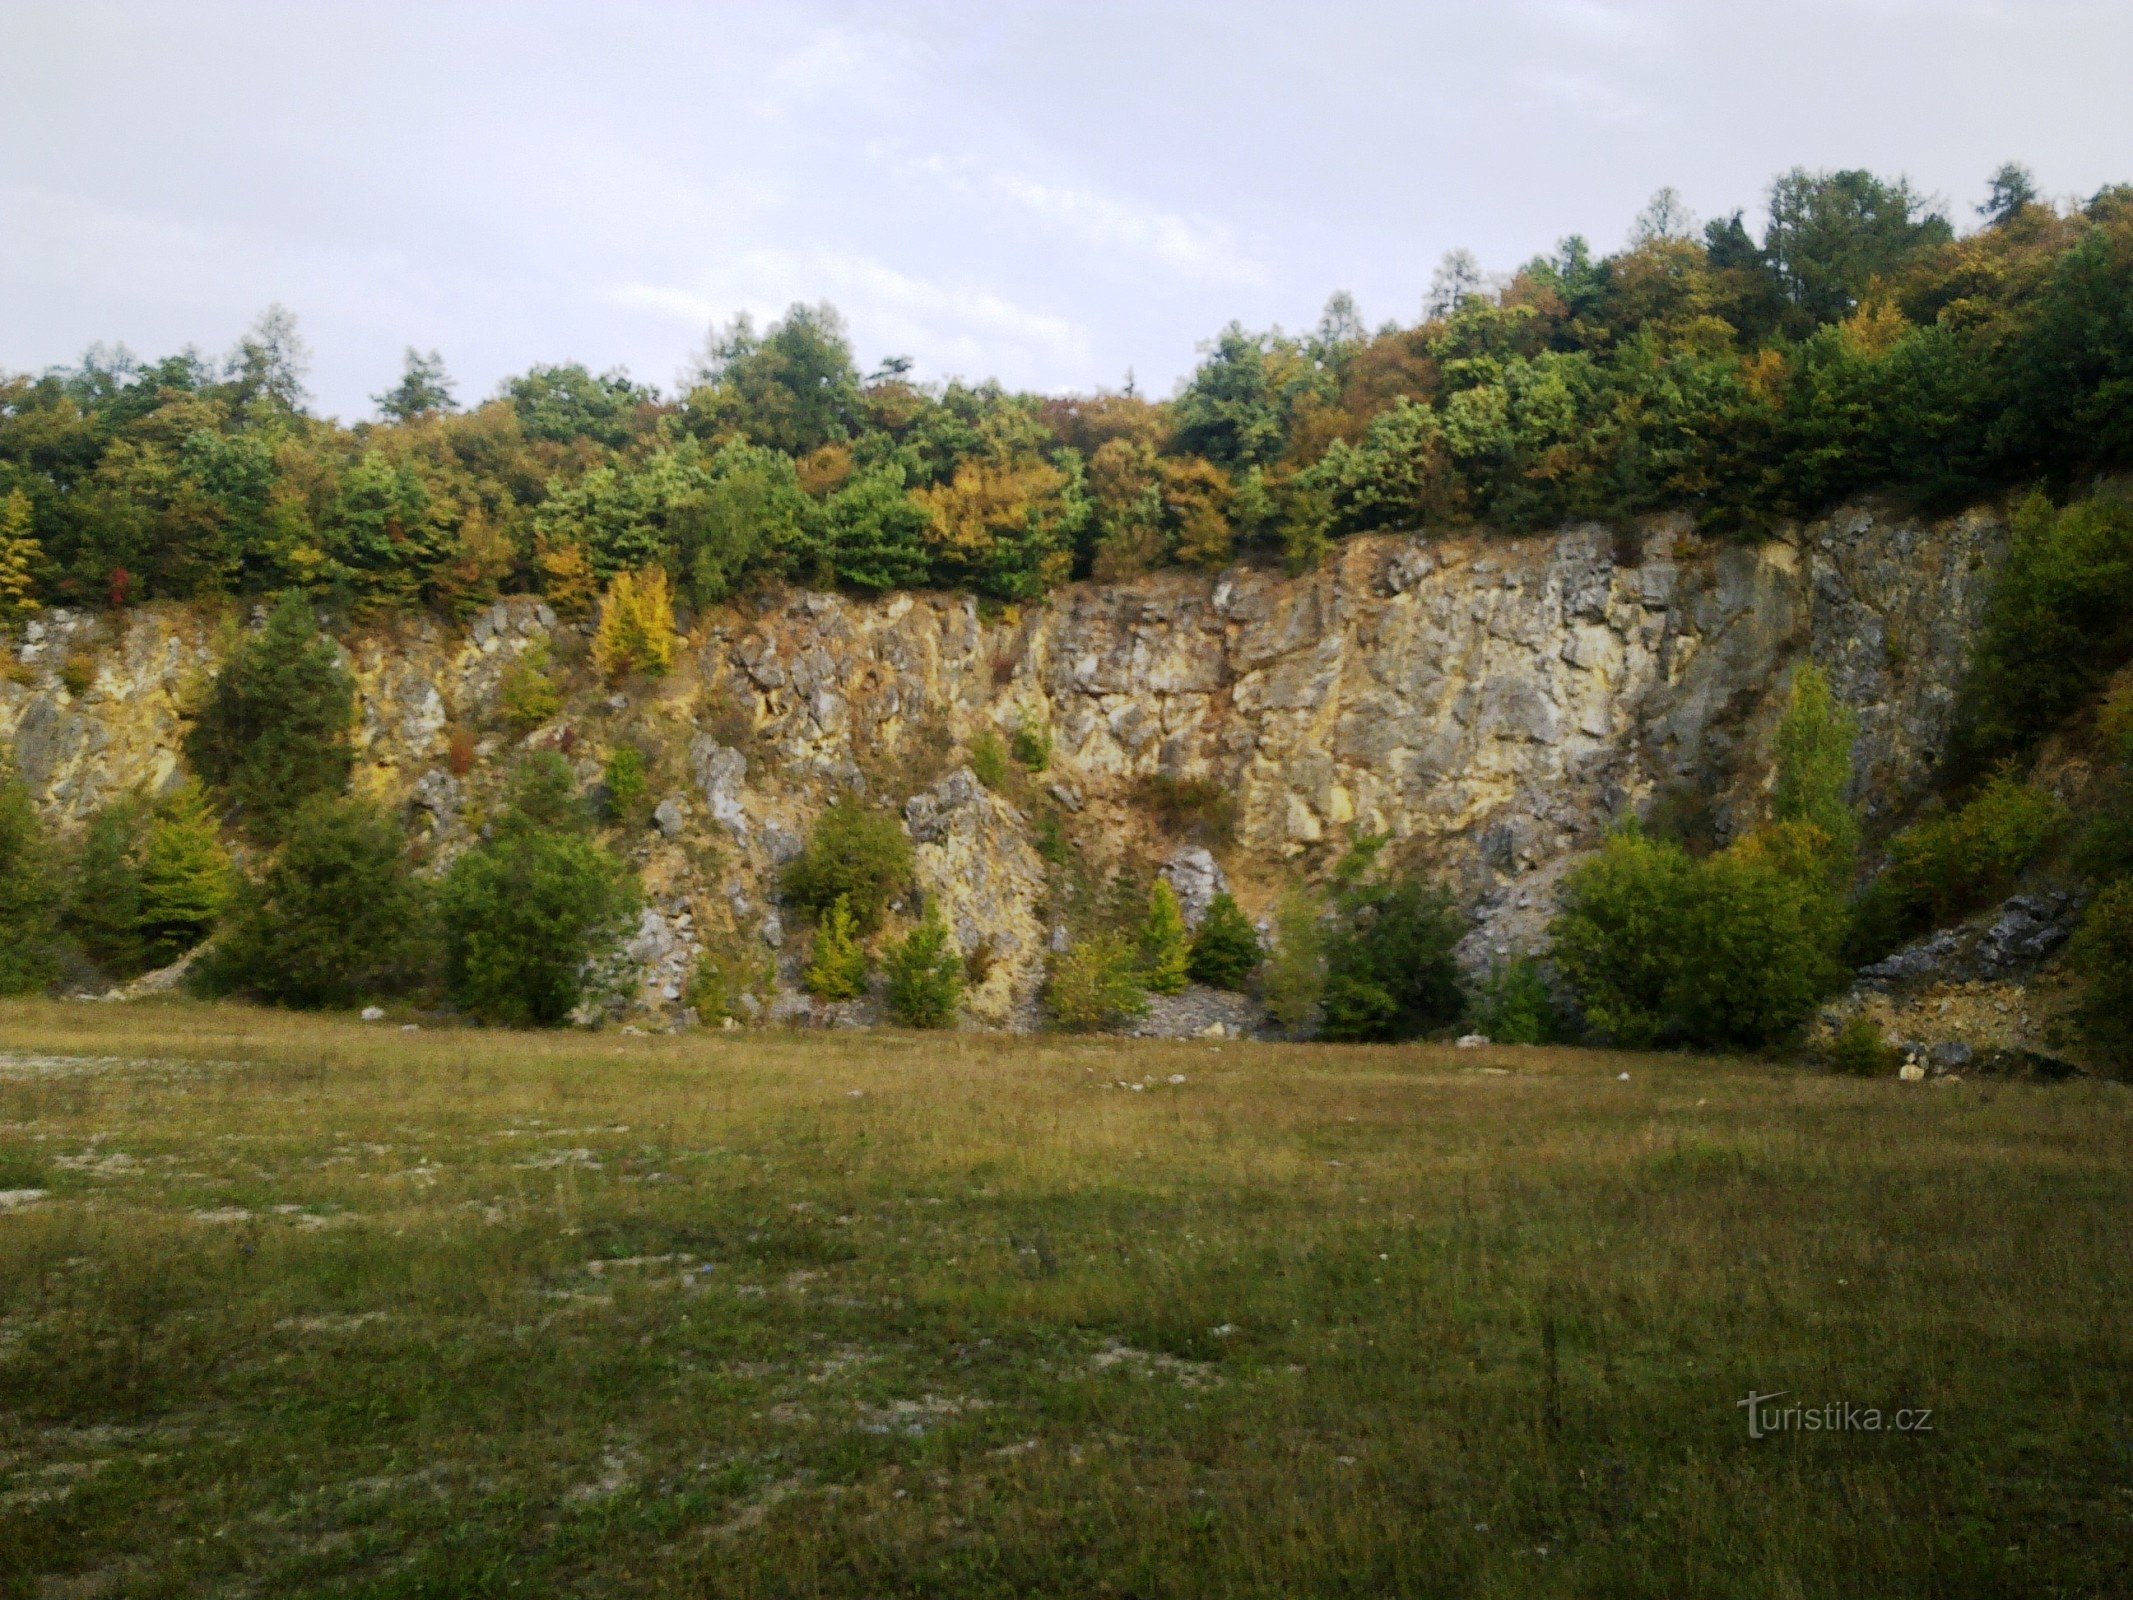 Limestone quarry under Hádkem